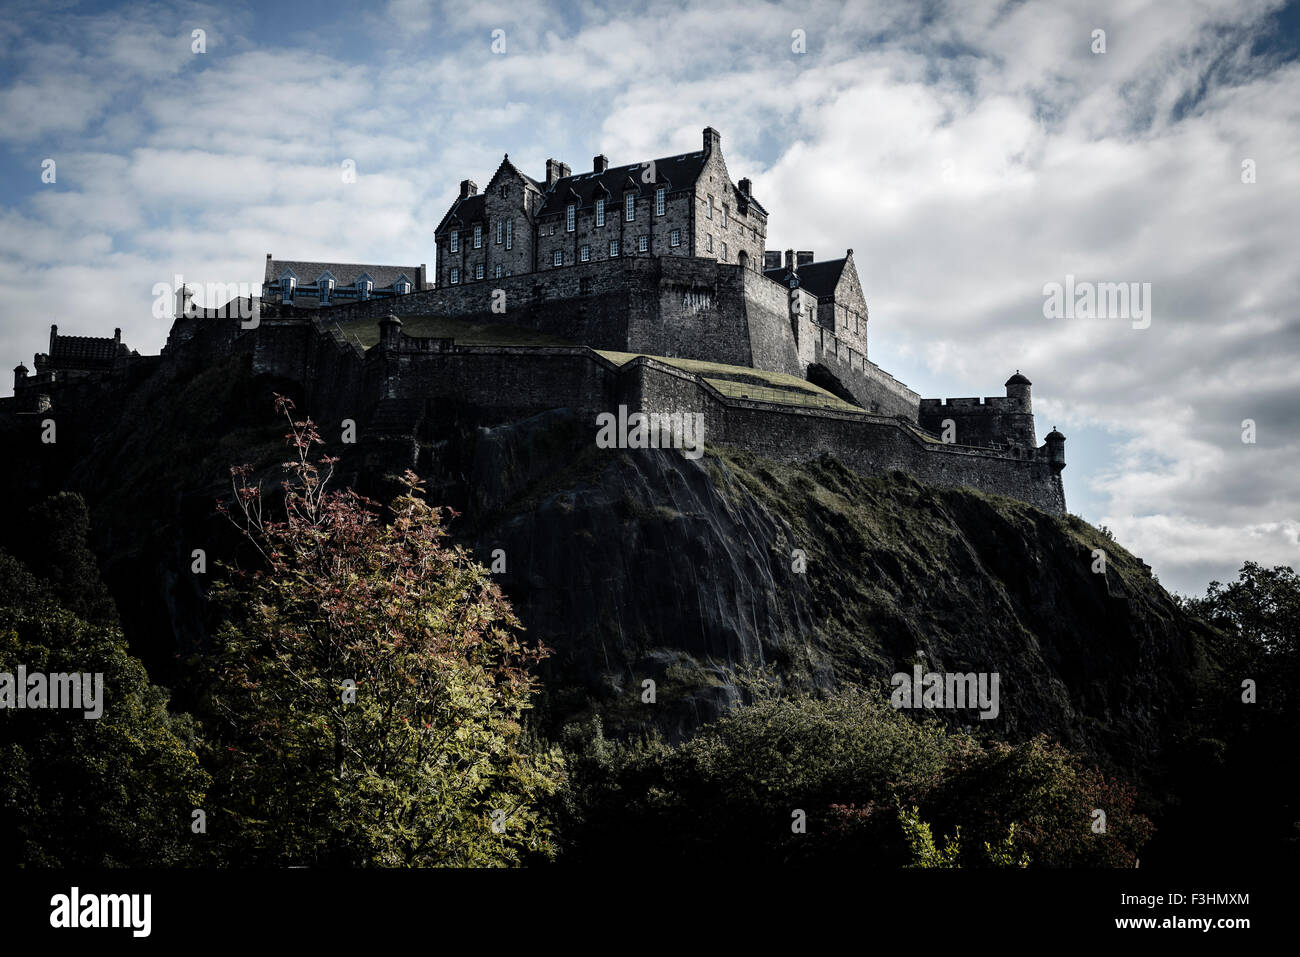 Look at Edinburgh Castle